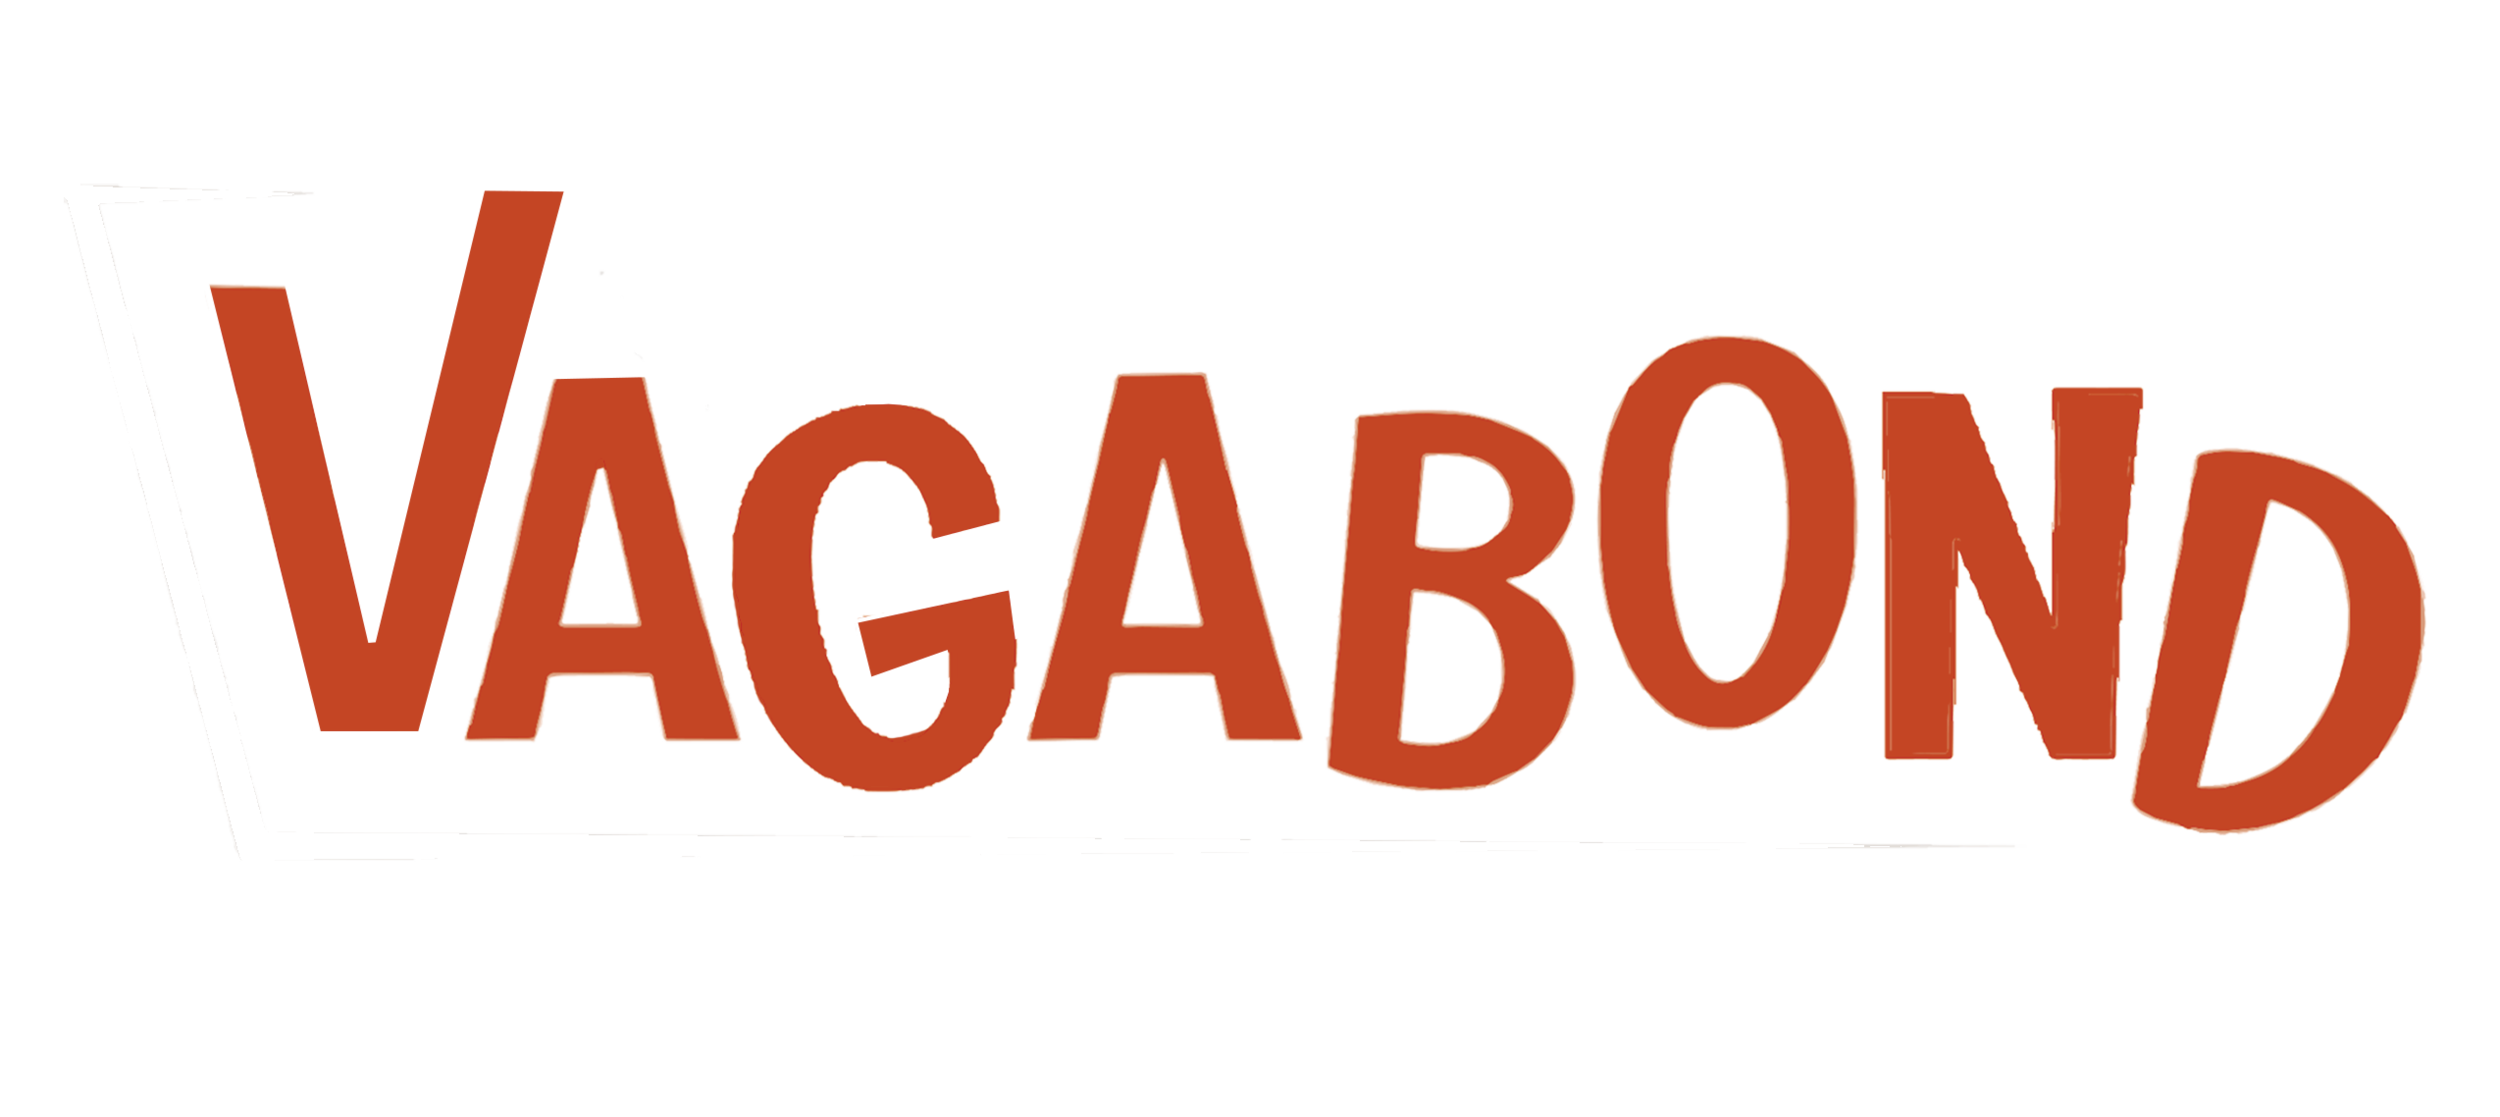 The Vagabond — Vagabond Group Consulting, LLC